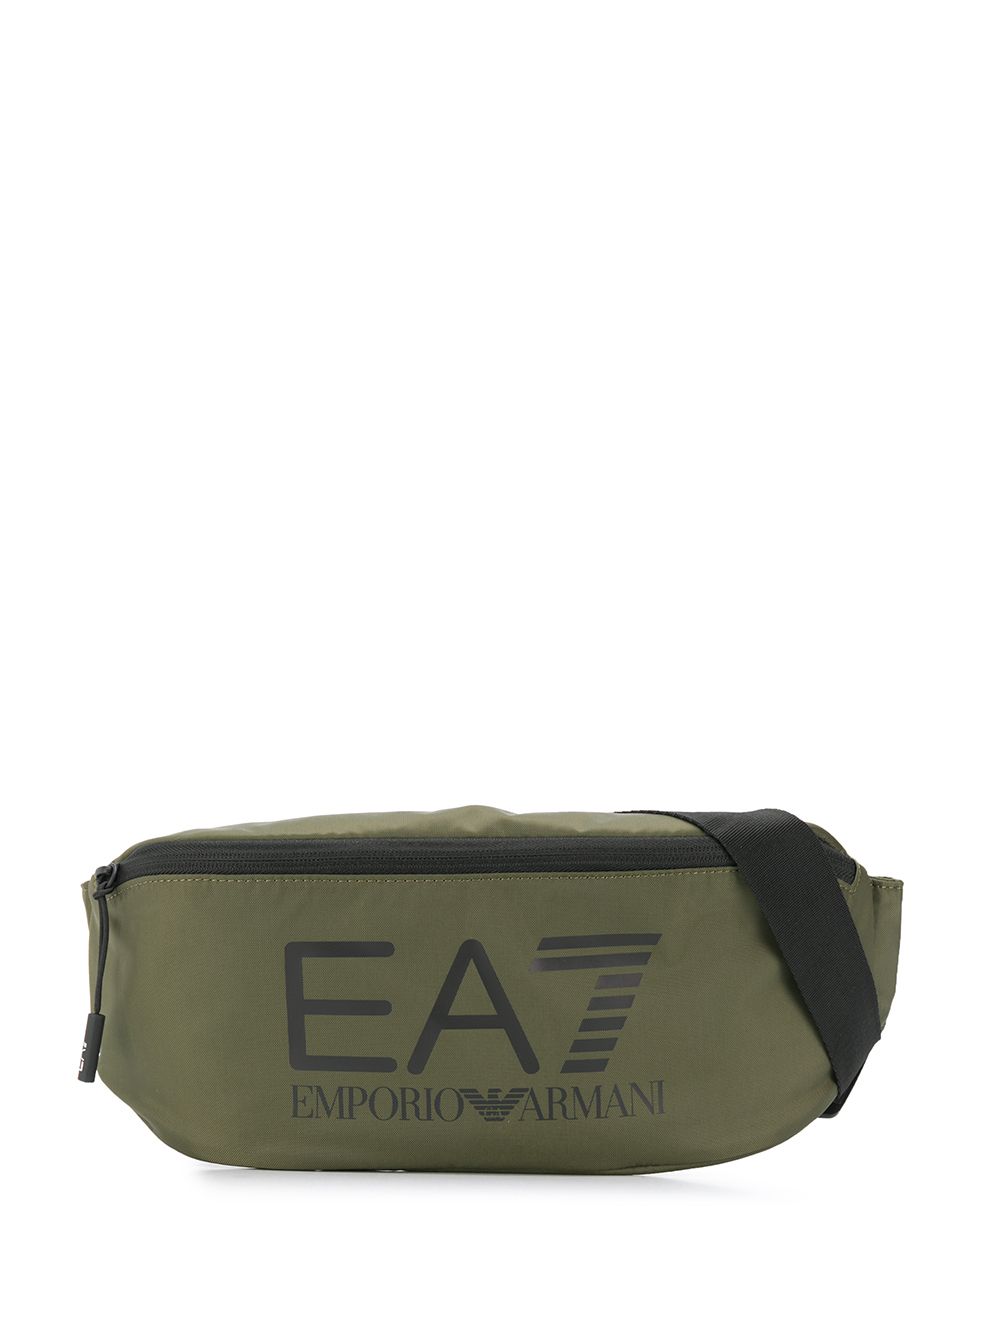 фото Ea7 Emporio Armani поясная сумка с логотипом